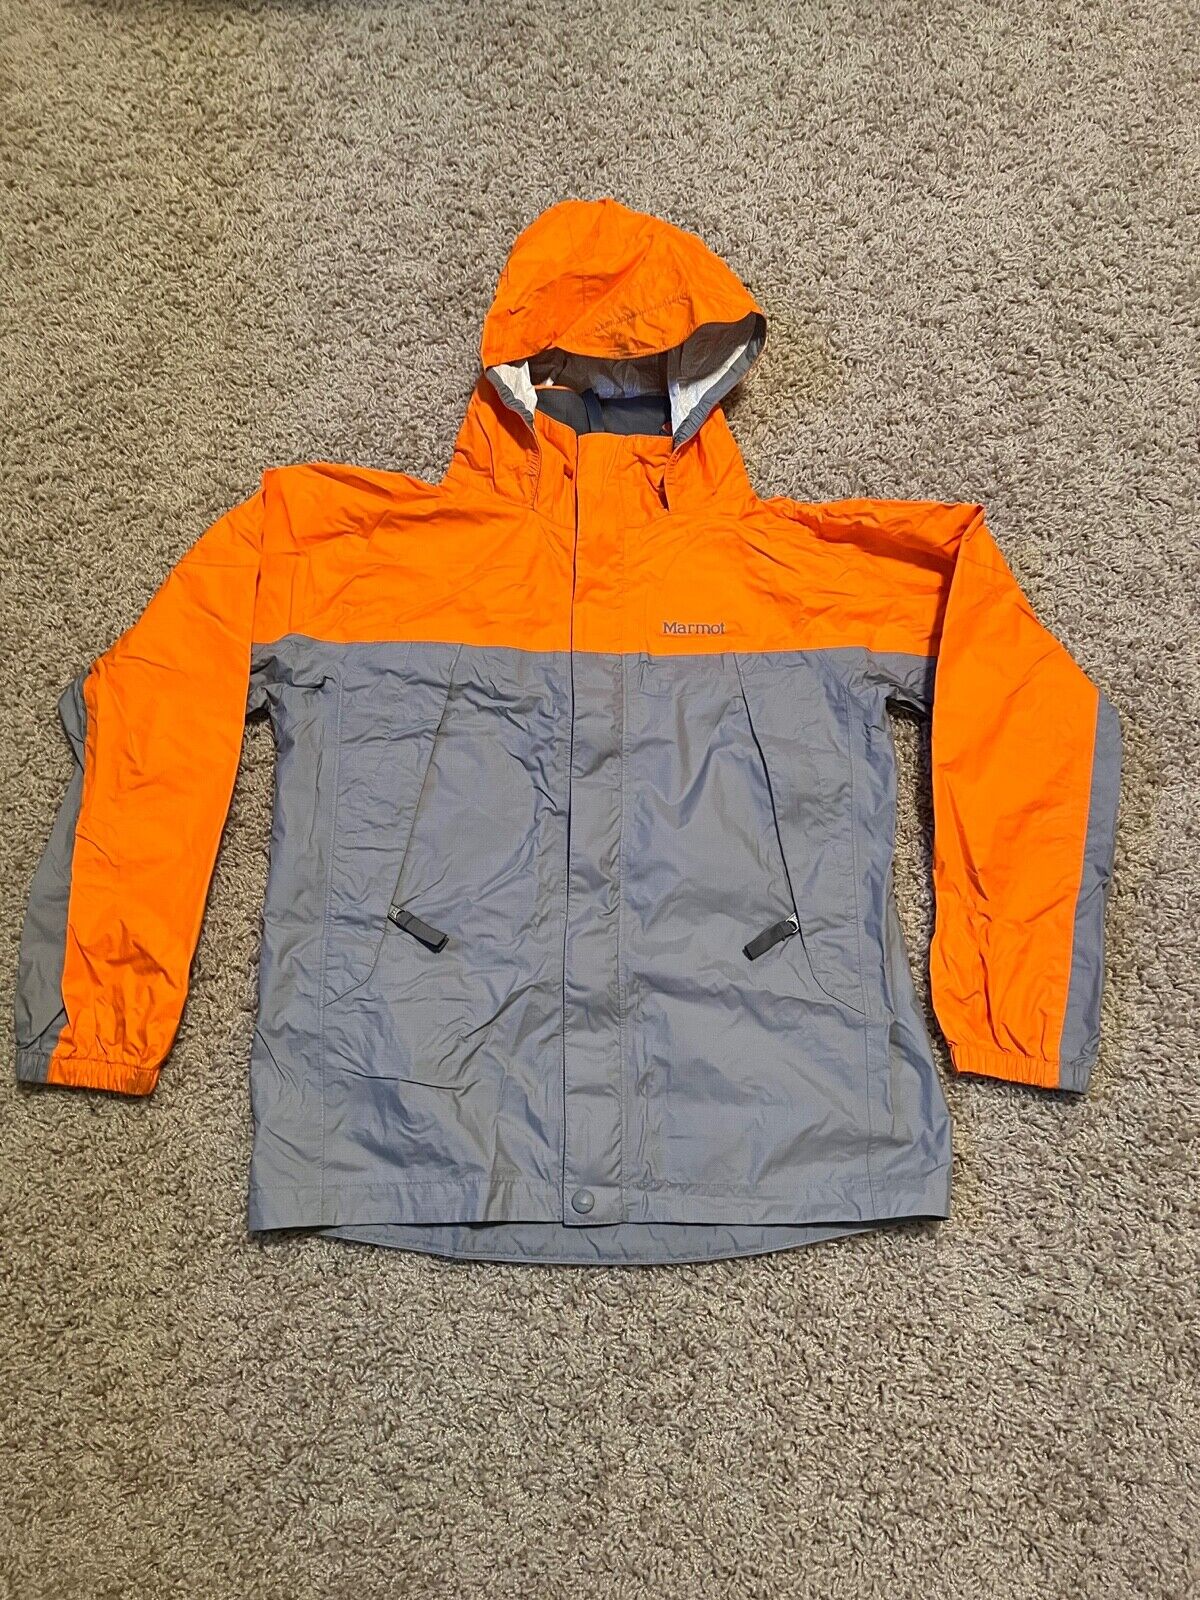 Marmot Rain Shell, Youth Large, Orange/gray